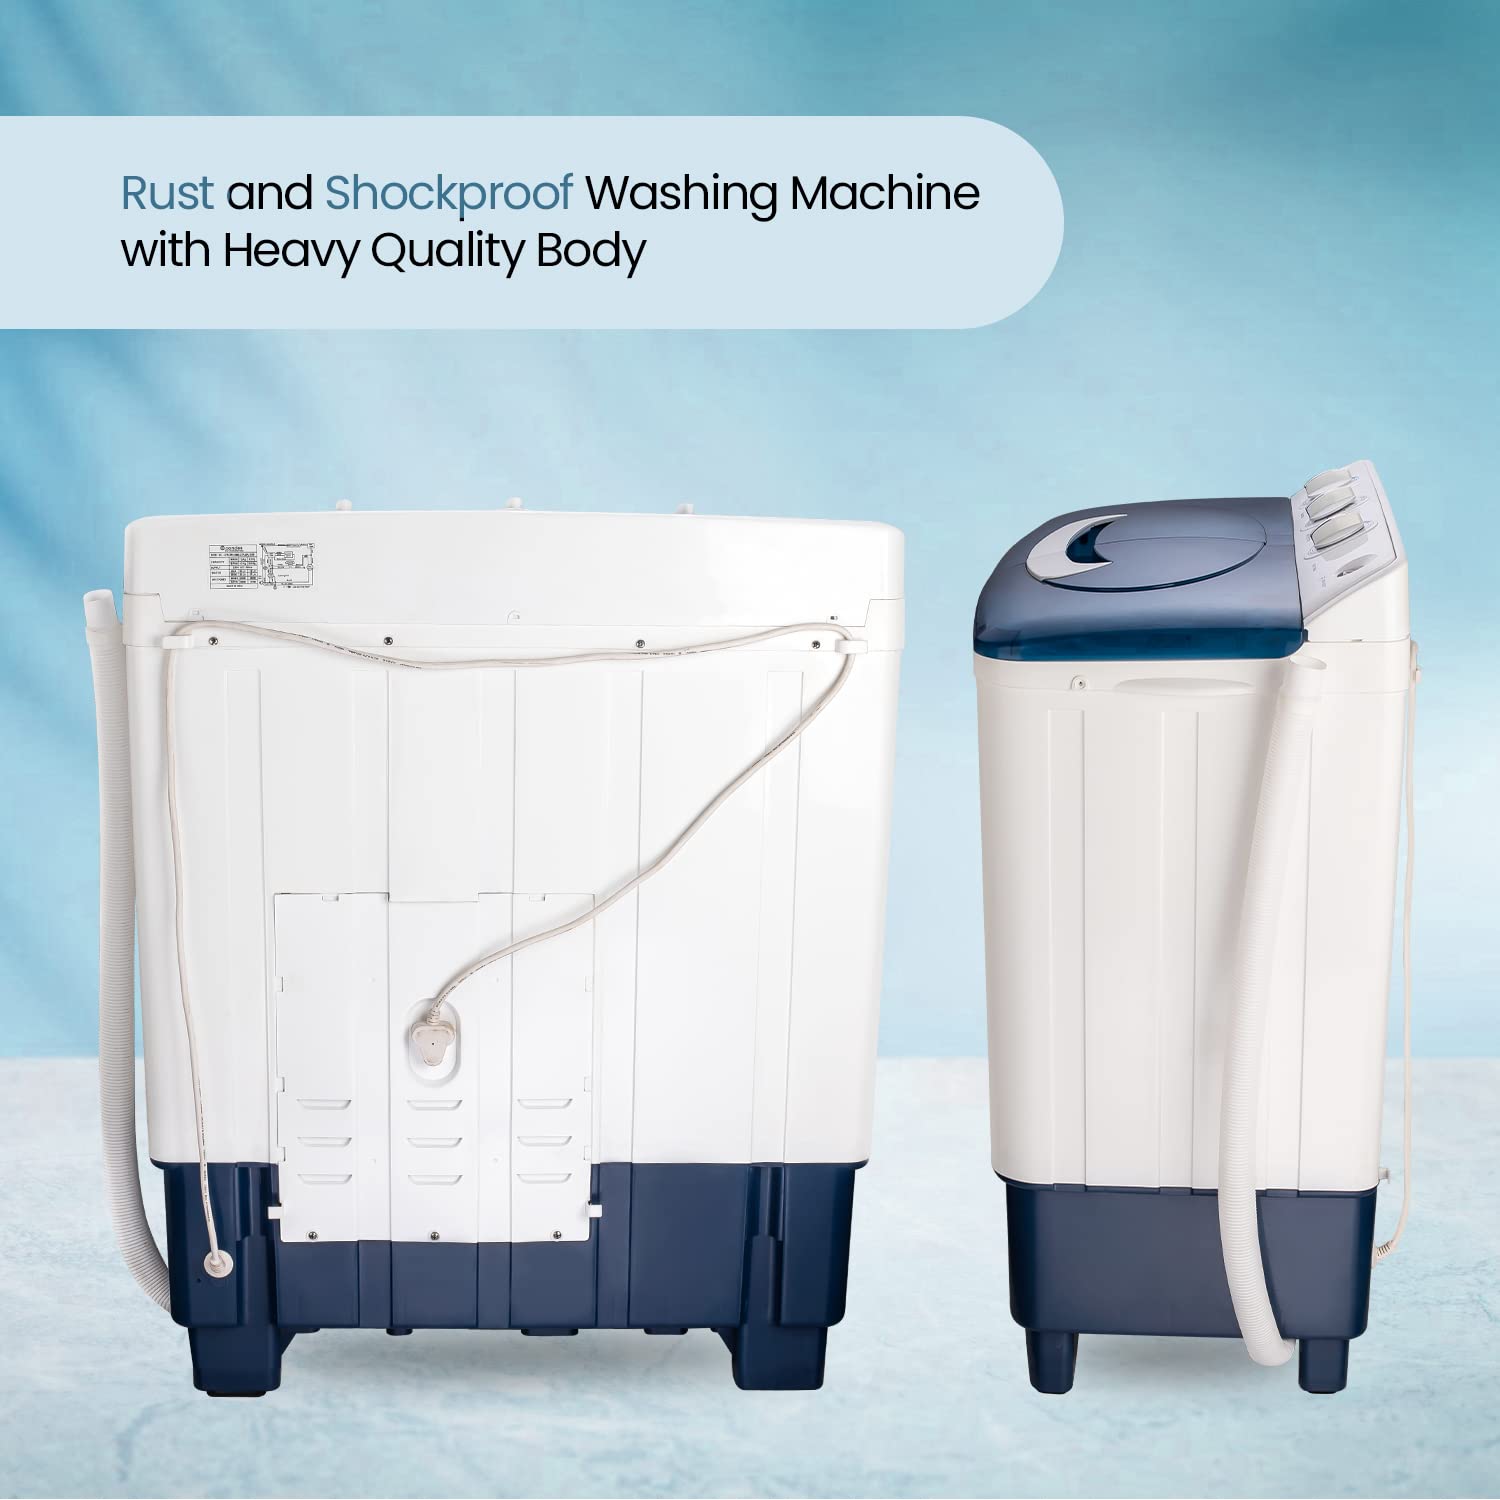 7.8 kg Semi Automatic Top Load Washing Machine, Blue White